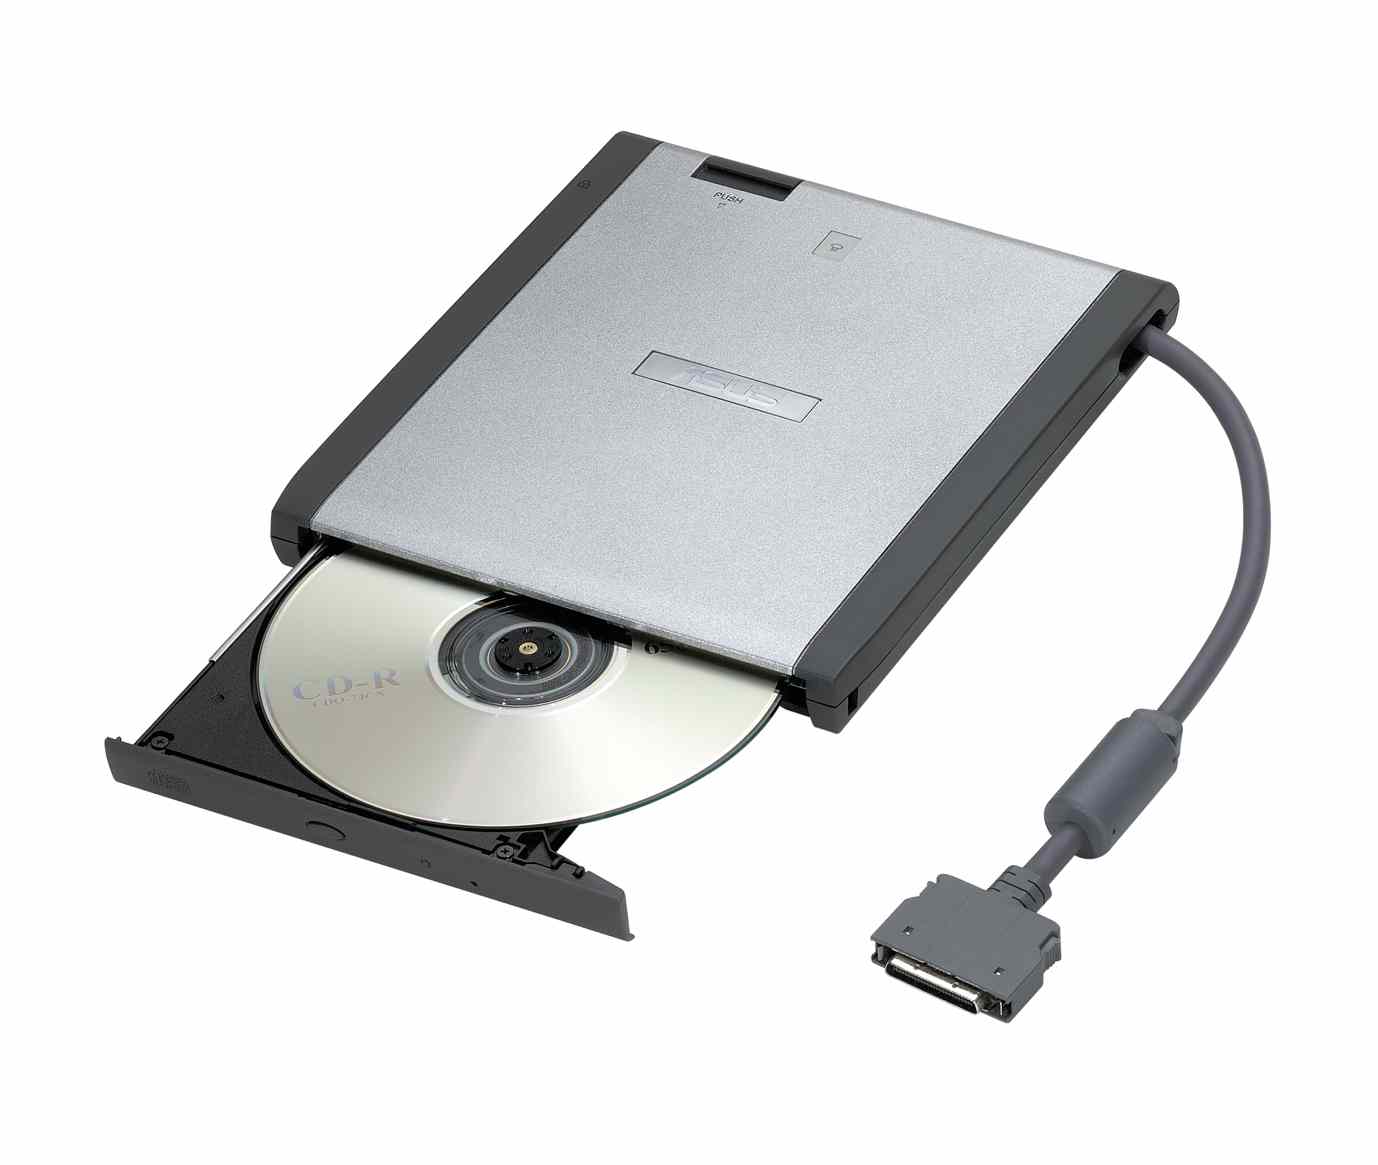 CD-ROM (CD - read only Memory)